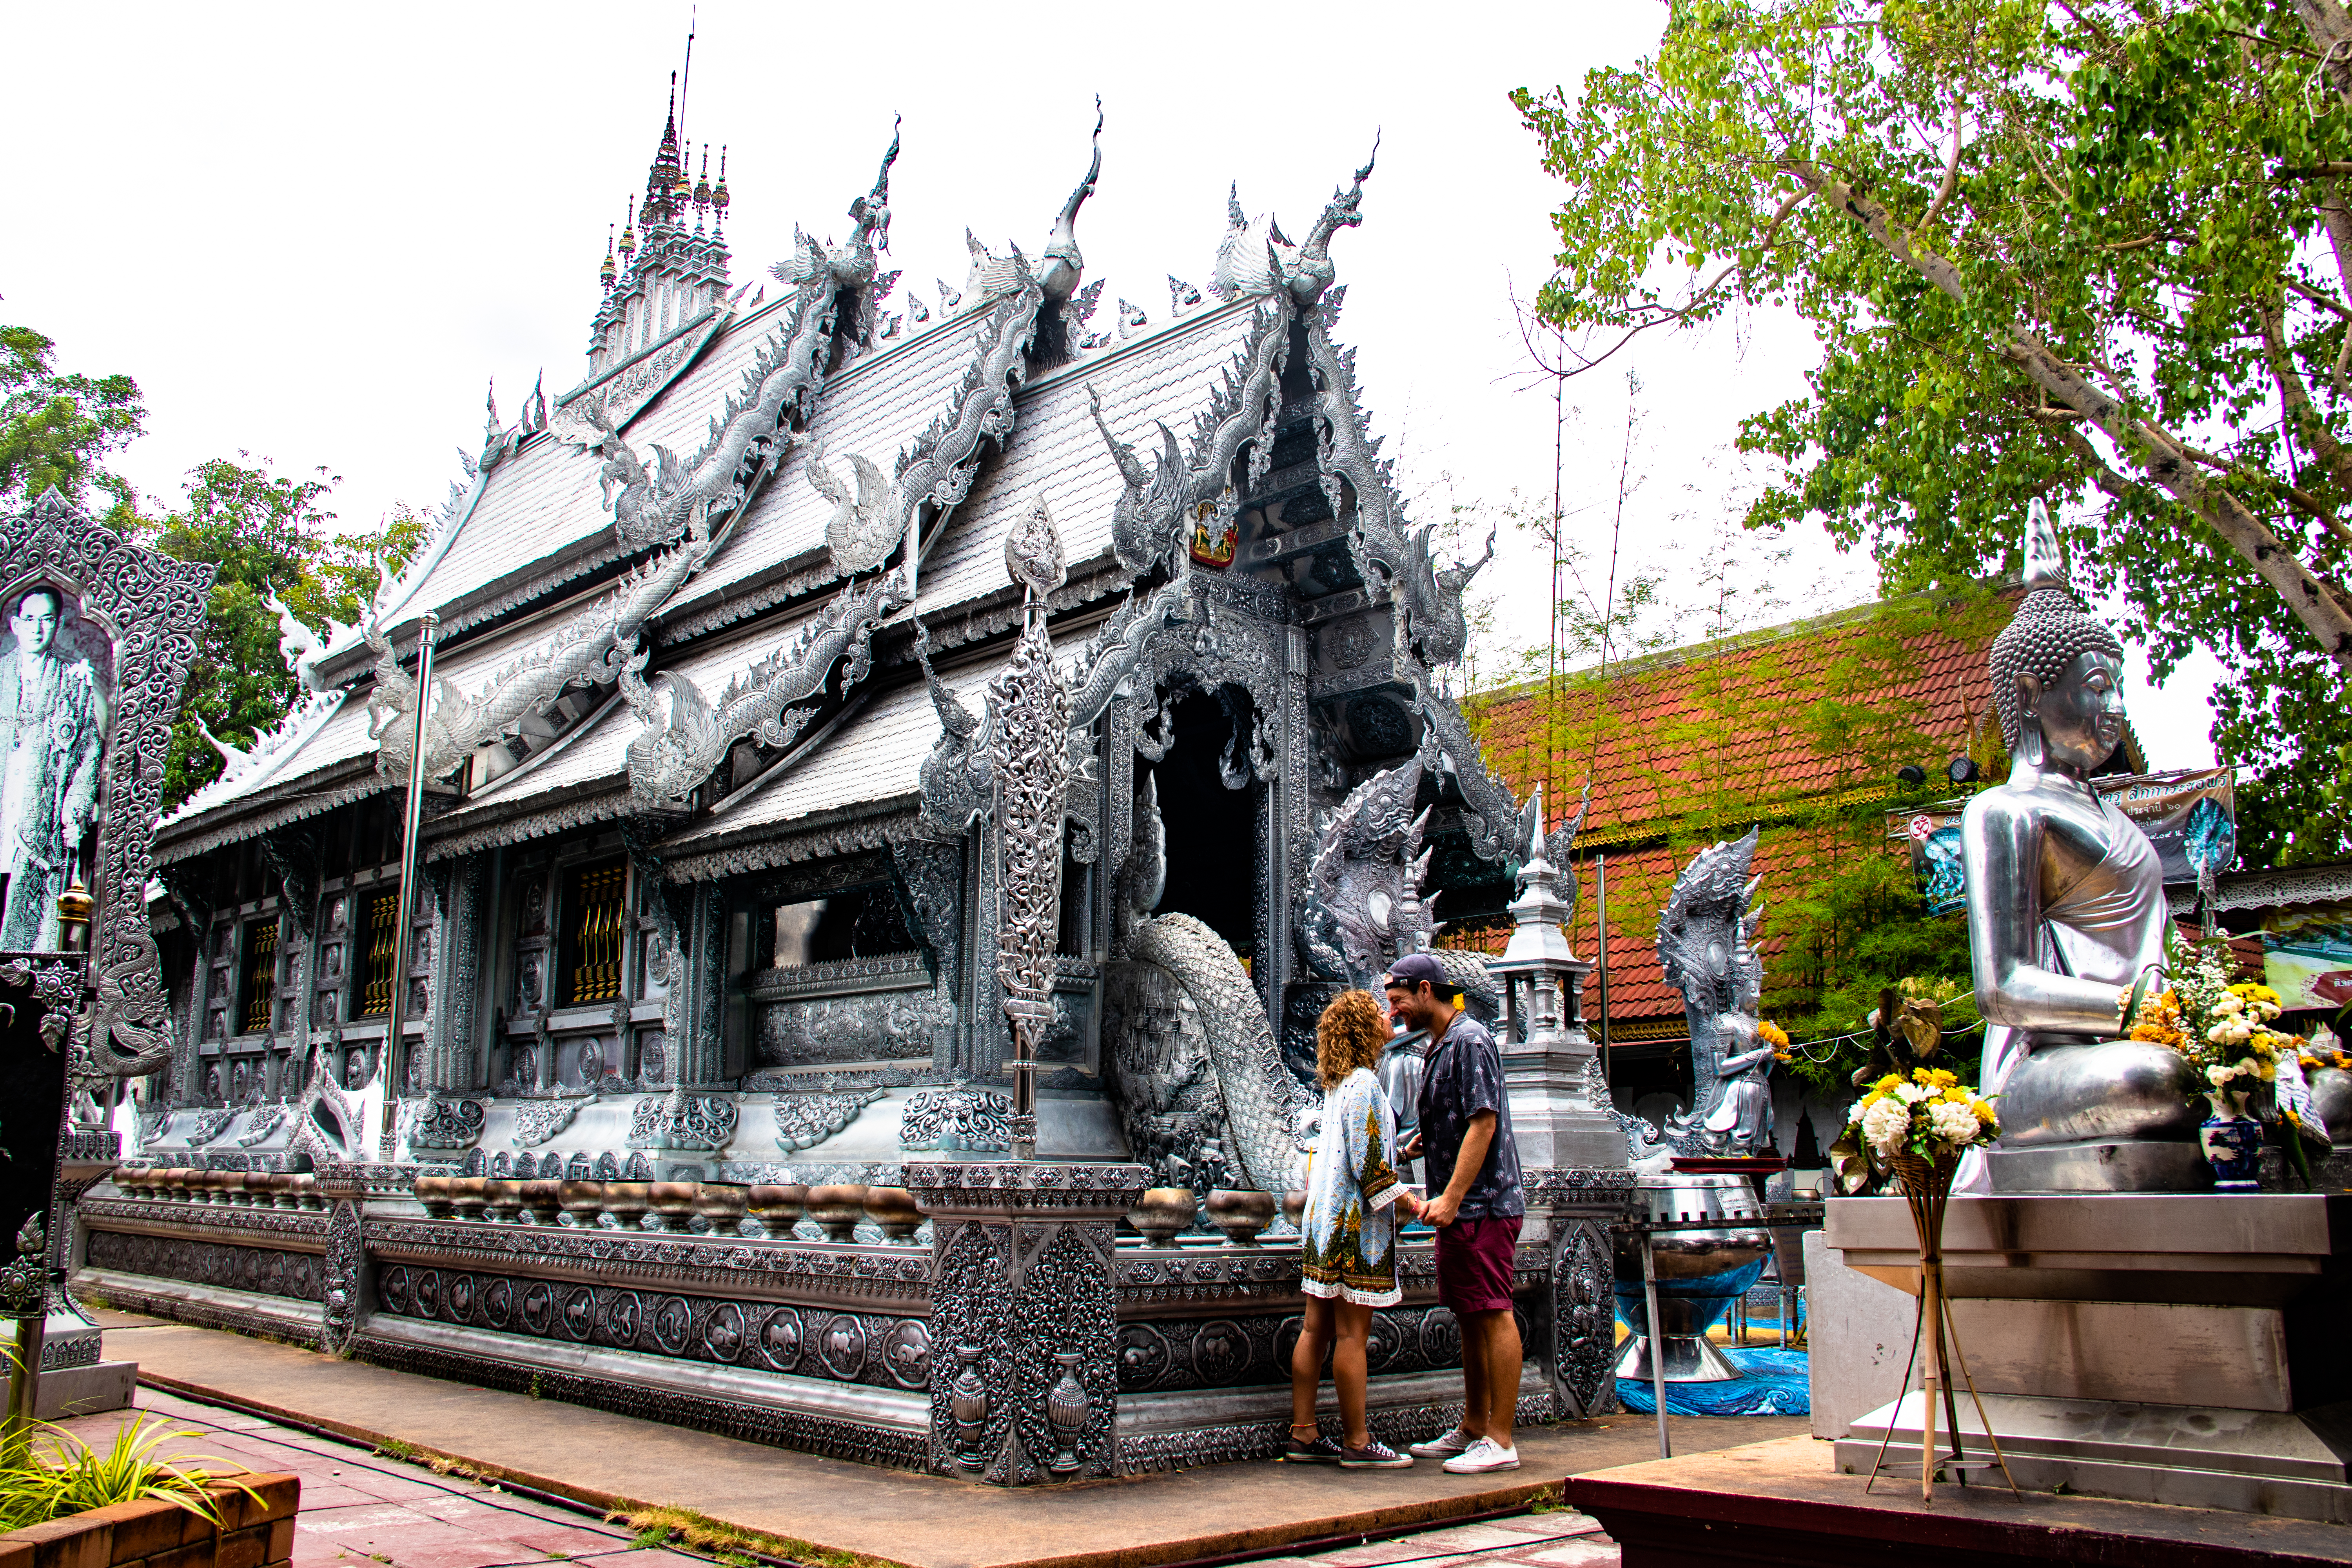 WanderWithUs-Thailand-ChiangMai-SilverTemple-1.jpg